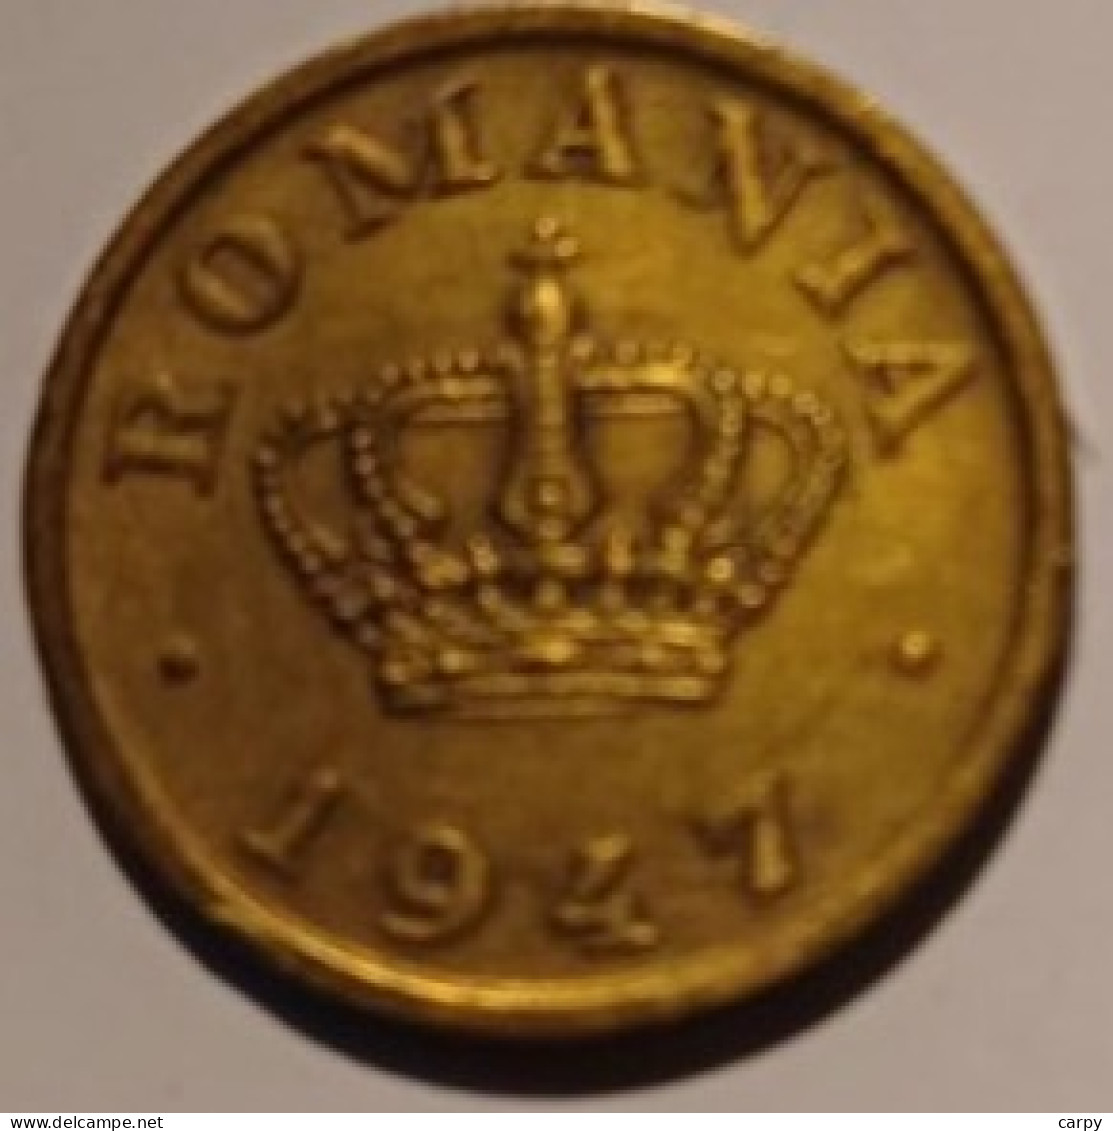 ROMANIA 50 Bani 1947 / King Michael I / Very Nice Looking / RARE - Romania